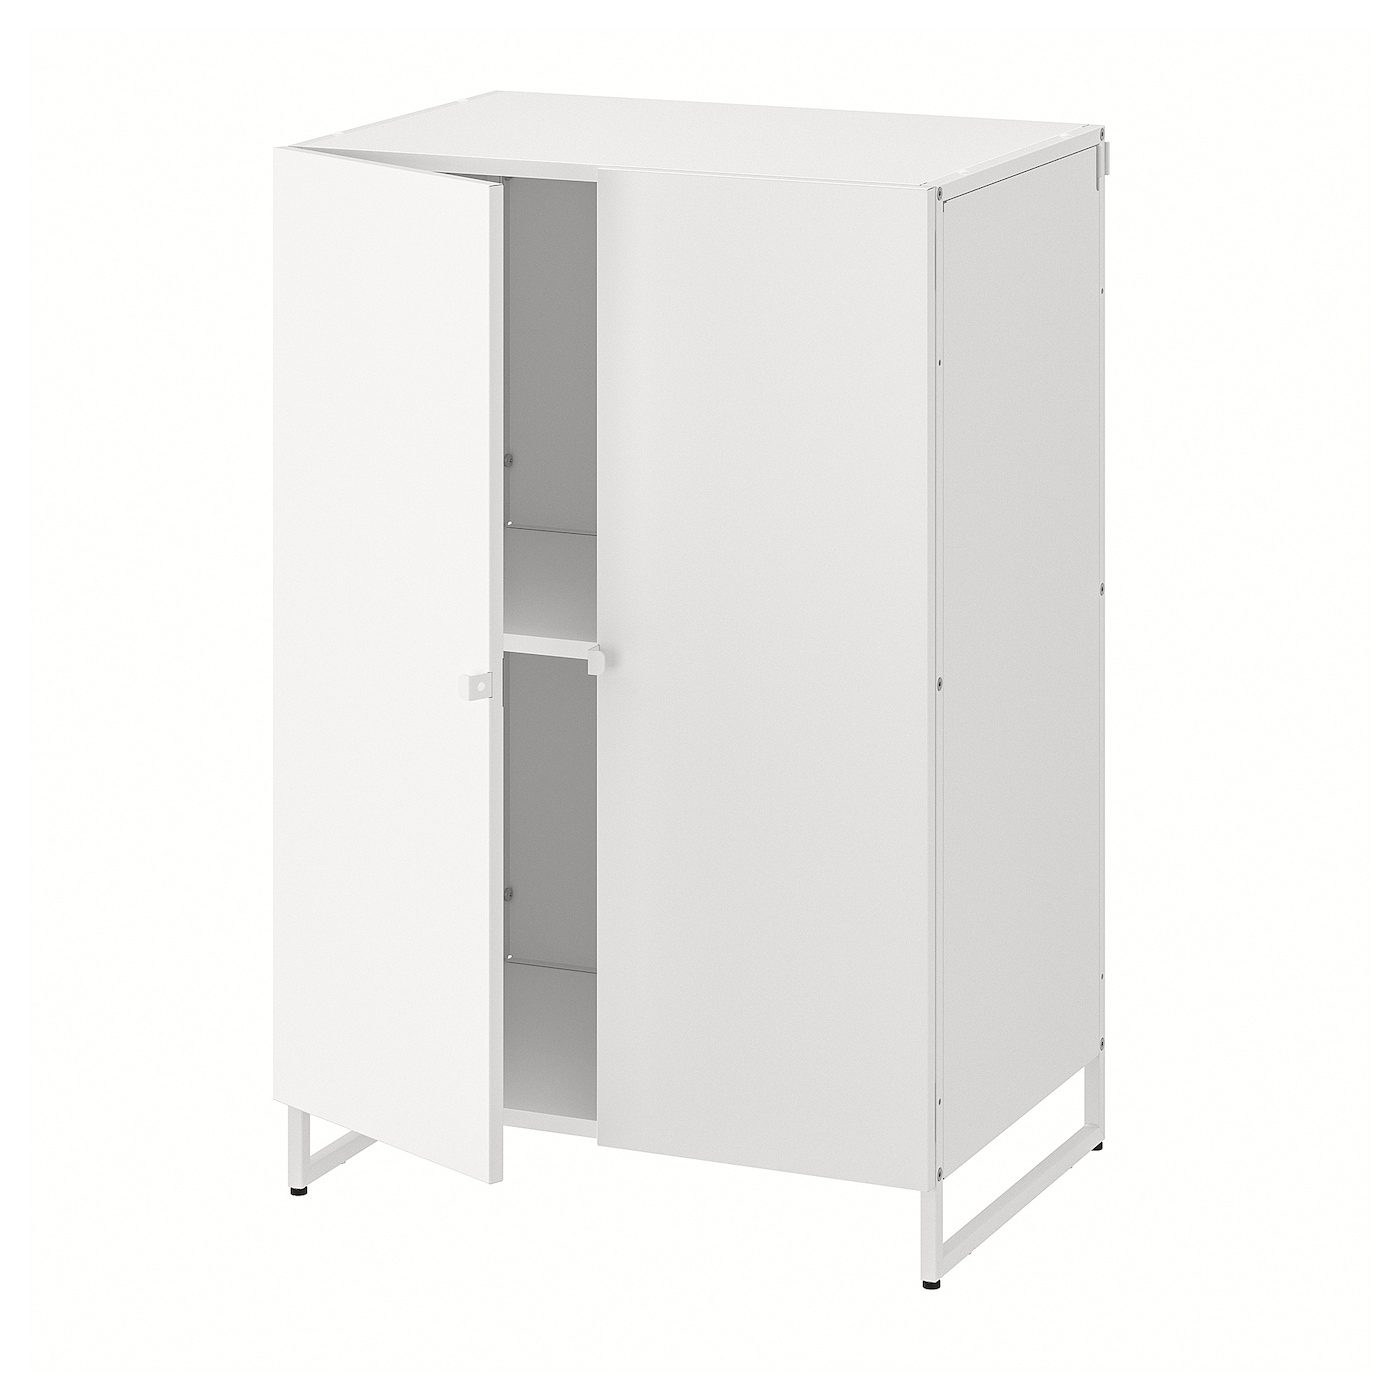 Книжный шкаф - JOSTEIN IKEA/ ЙОСТЕЙН ИКЕА,  90х61 см, белый